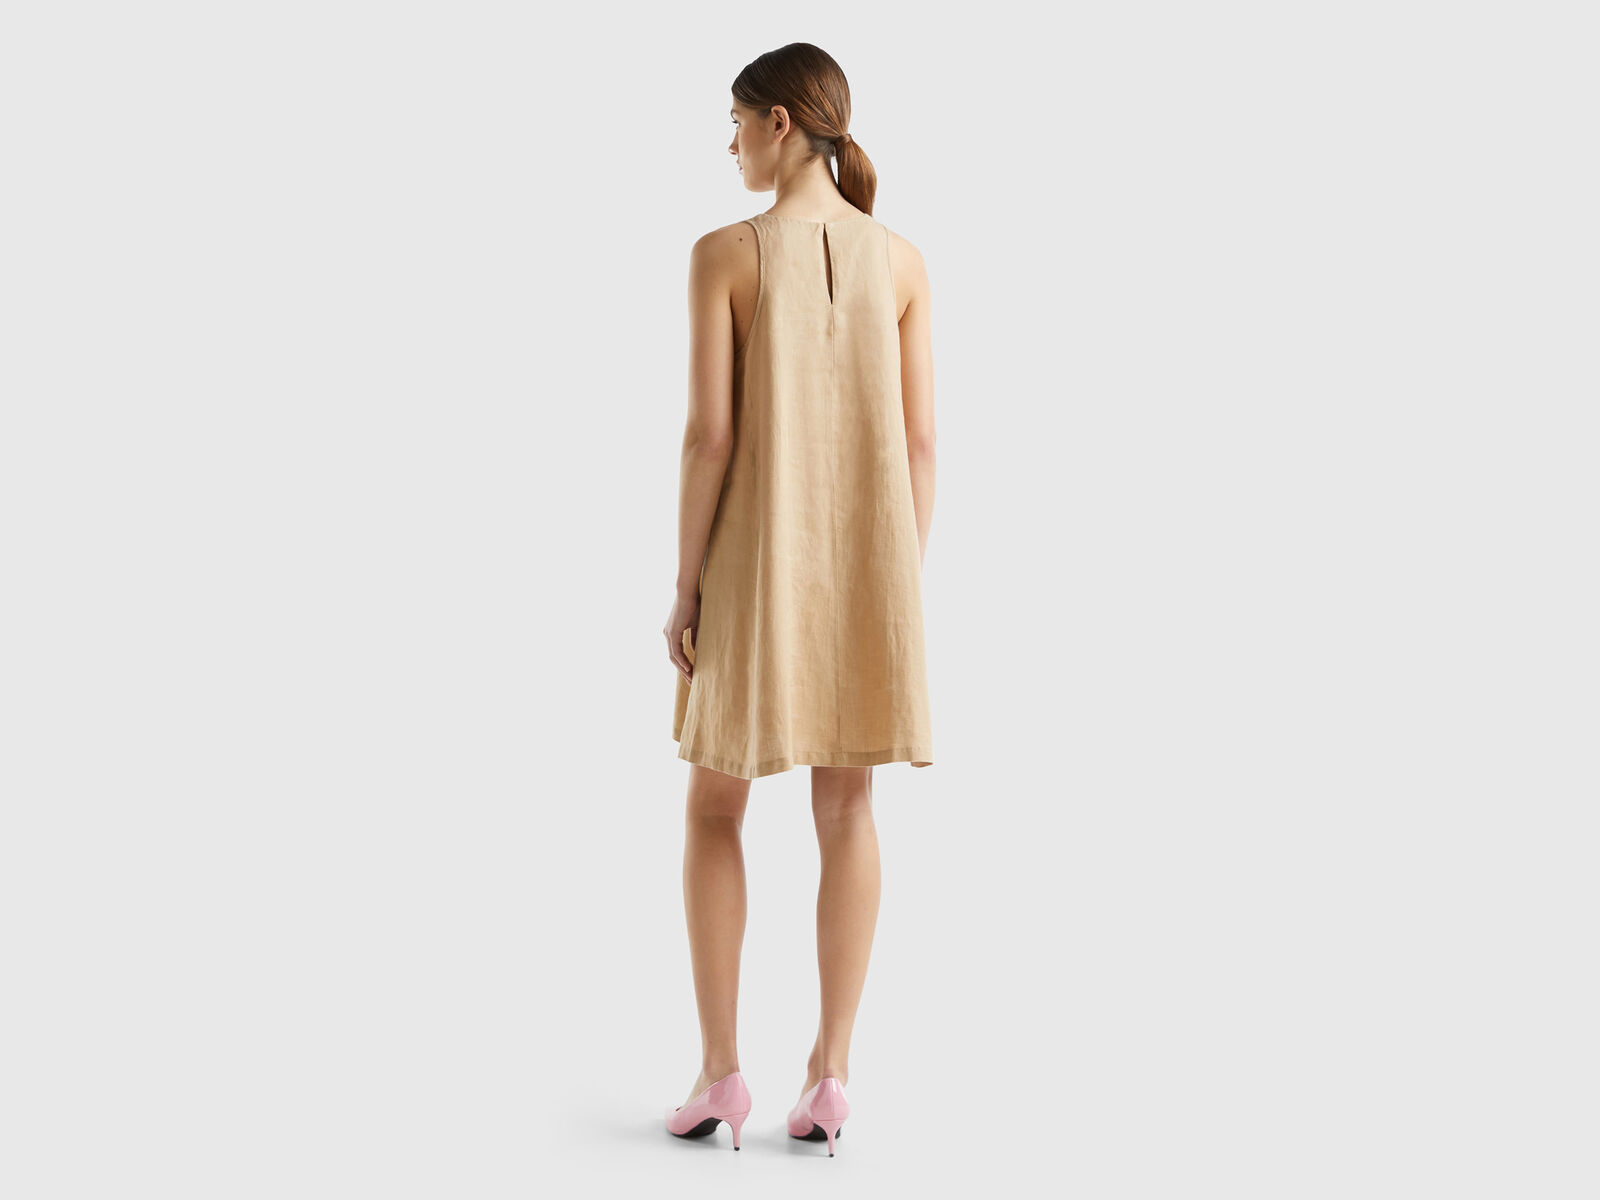 Sleeveless dress in pure linen - Camel